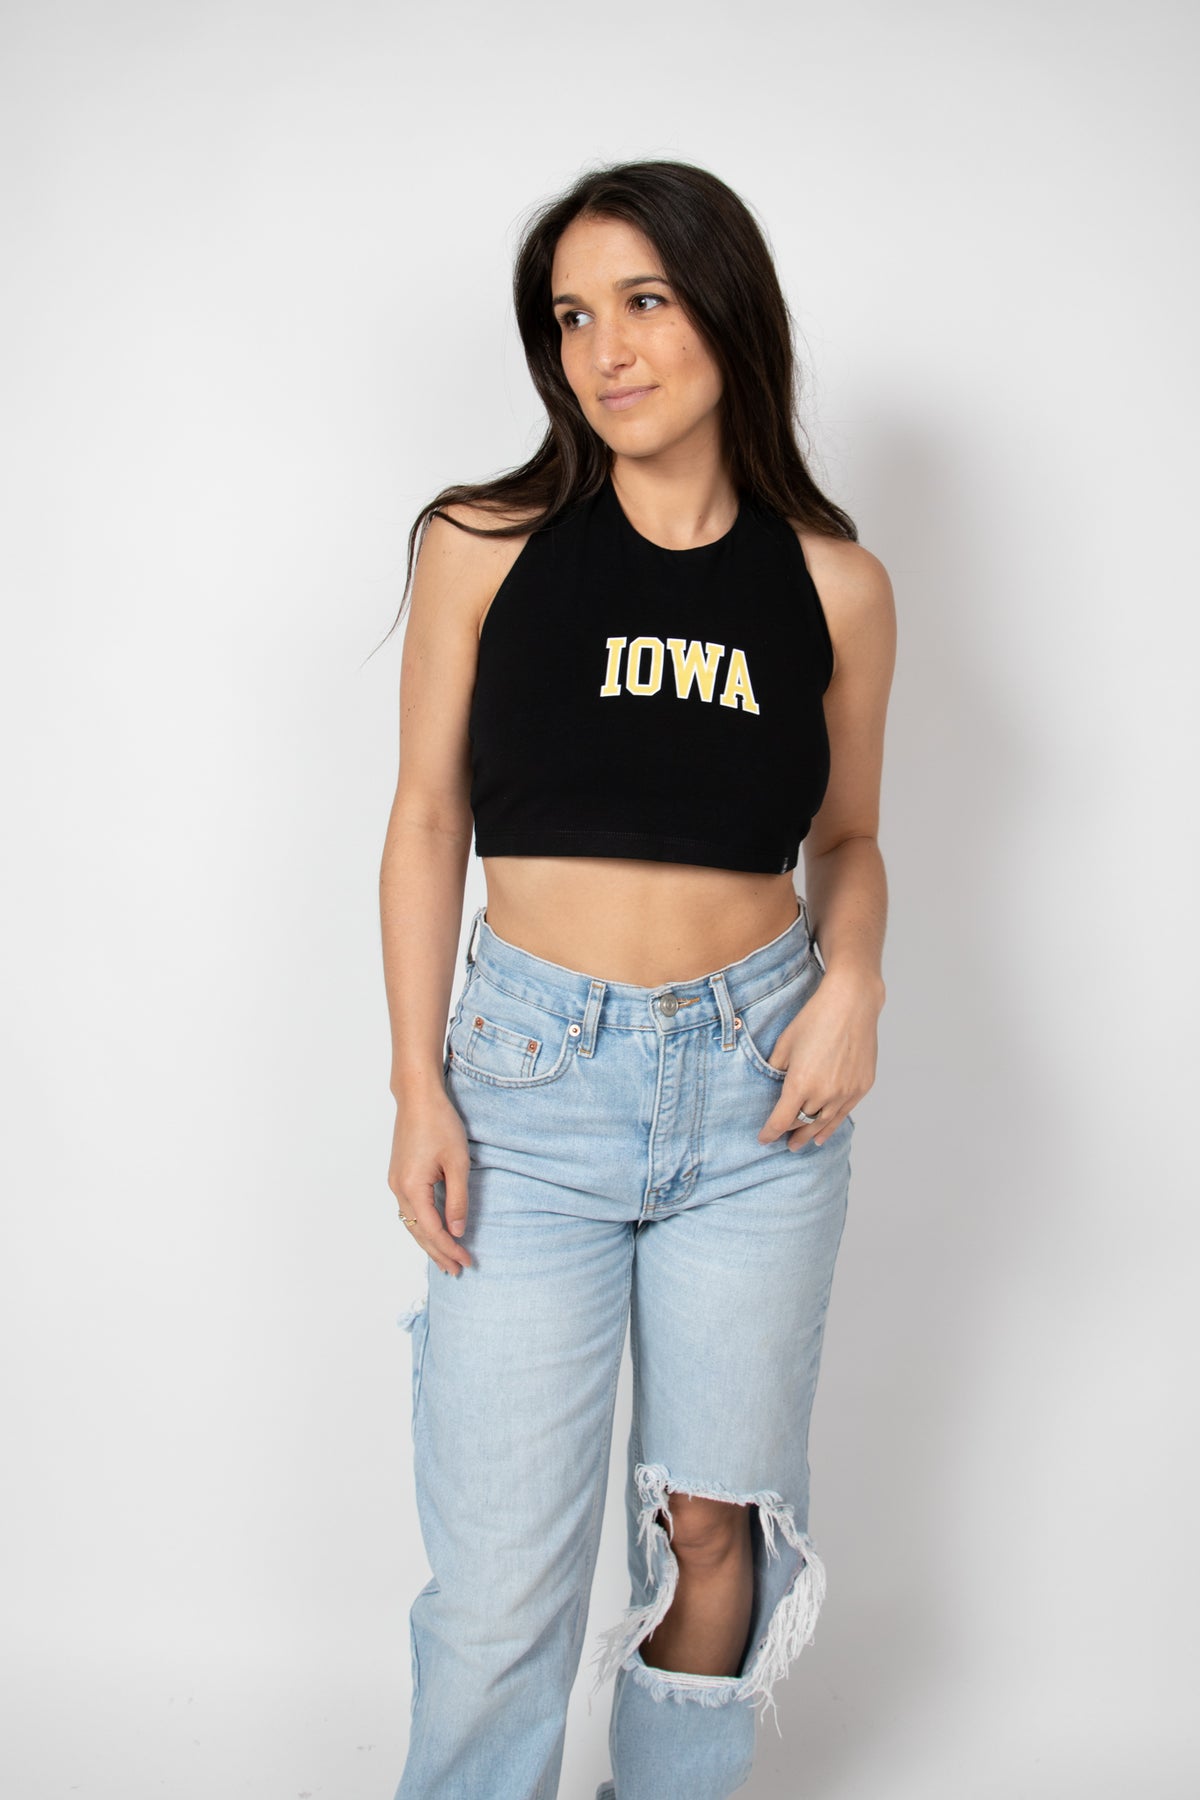 Iowa Hawkeyes Womens Hype and Vice Cropped Mesh Fashion Football